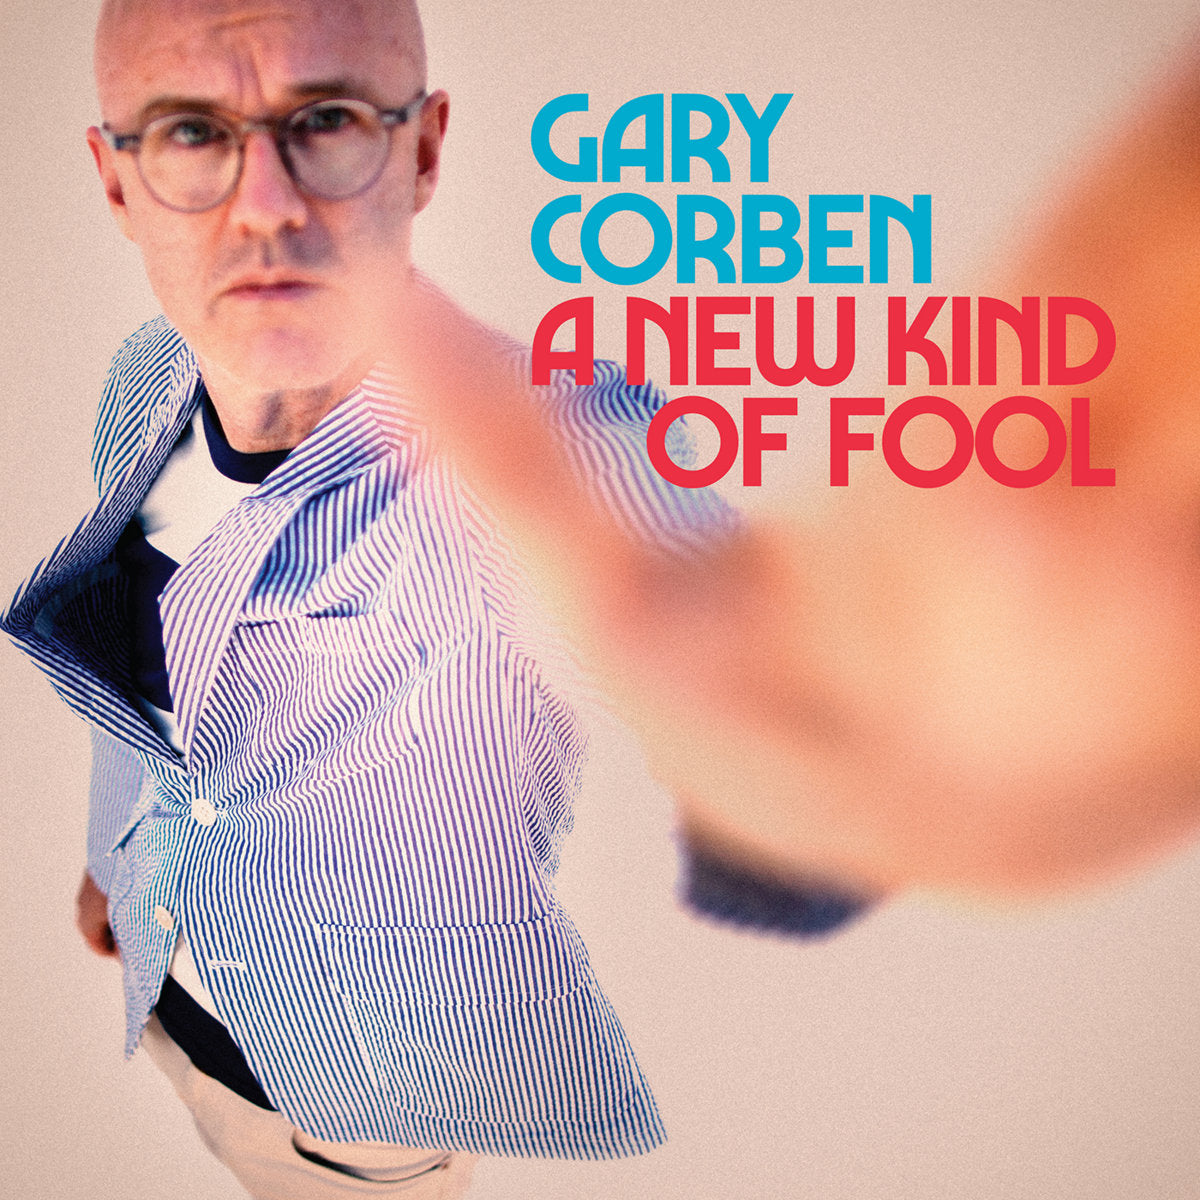 Gary Corben - "A New Kind of Fool"